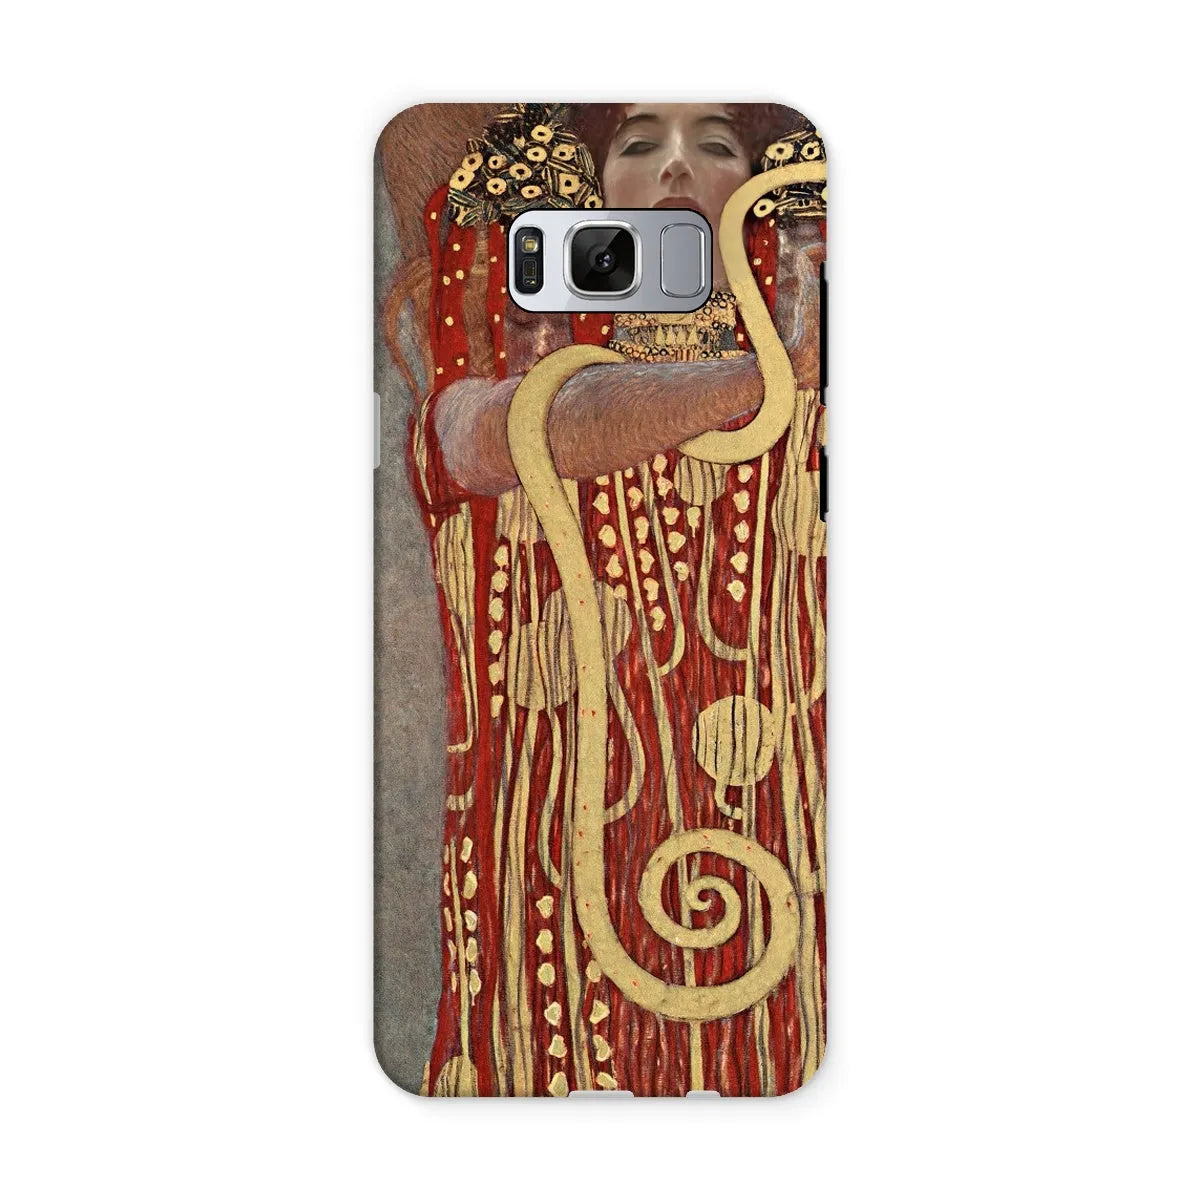 Hygieia - Vienna Succession Phone Case - Gustav Klimt - Samsung Galaxy S8 / Matte - Mobile Phone Cases - Aesthetic Art